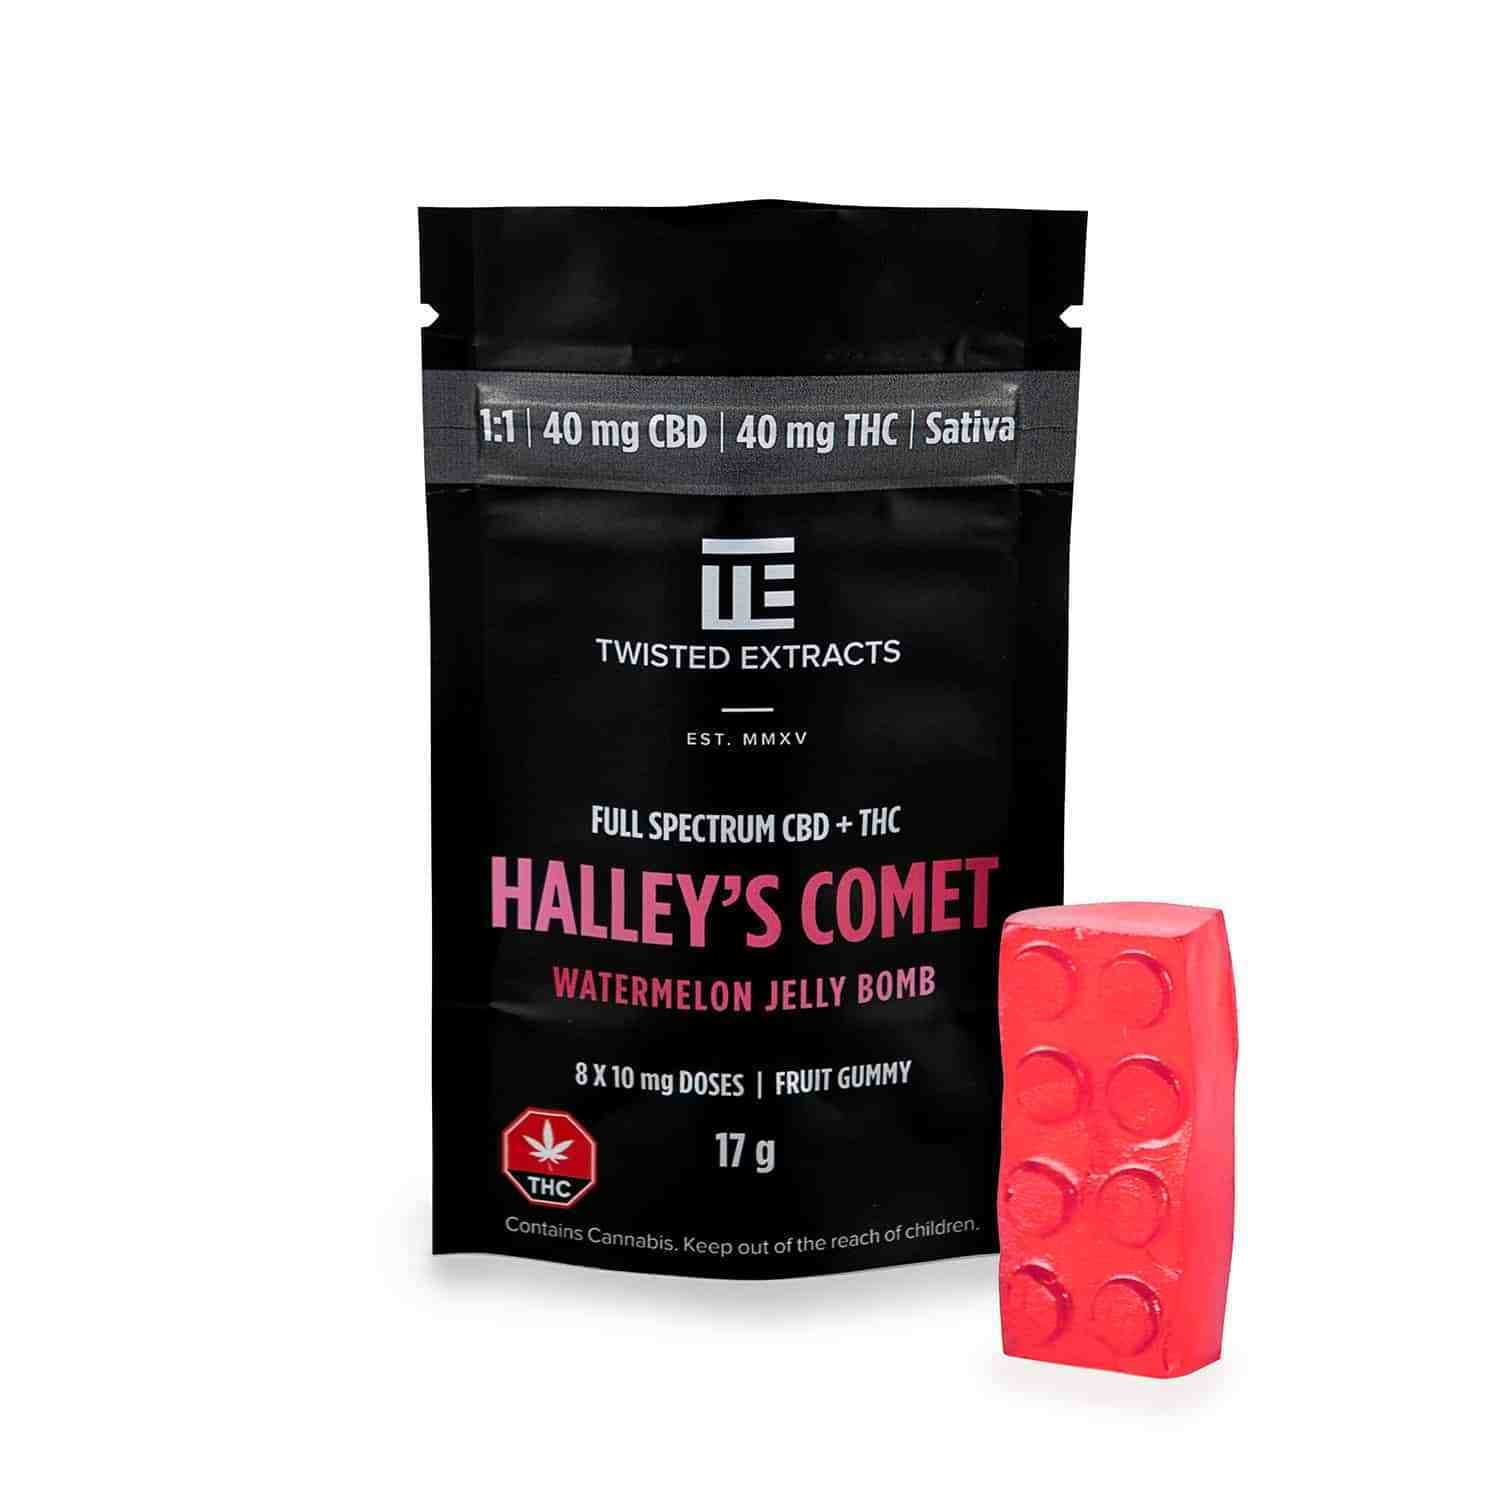 Halley's Comet Watermelon Jelly Bomb 1:1